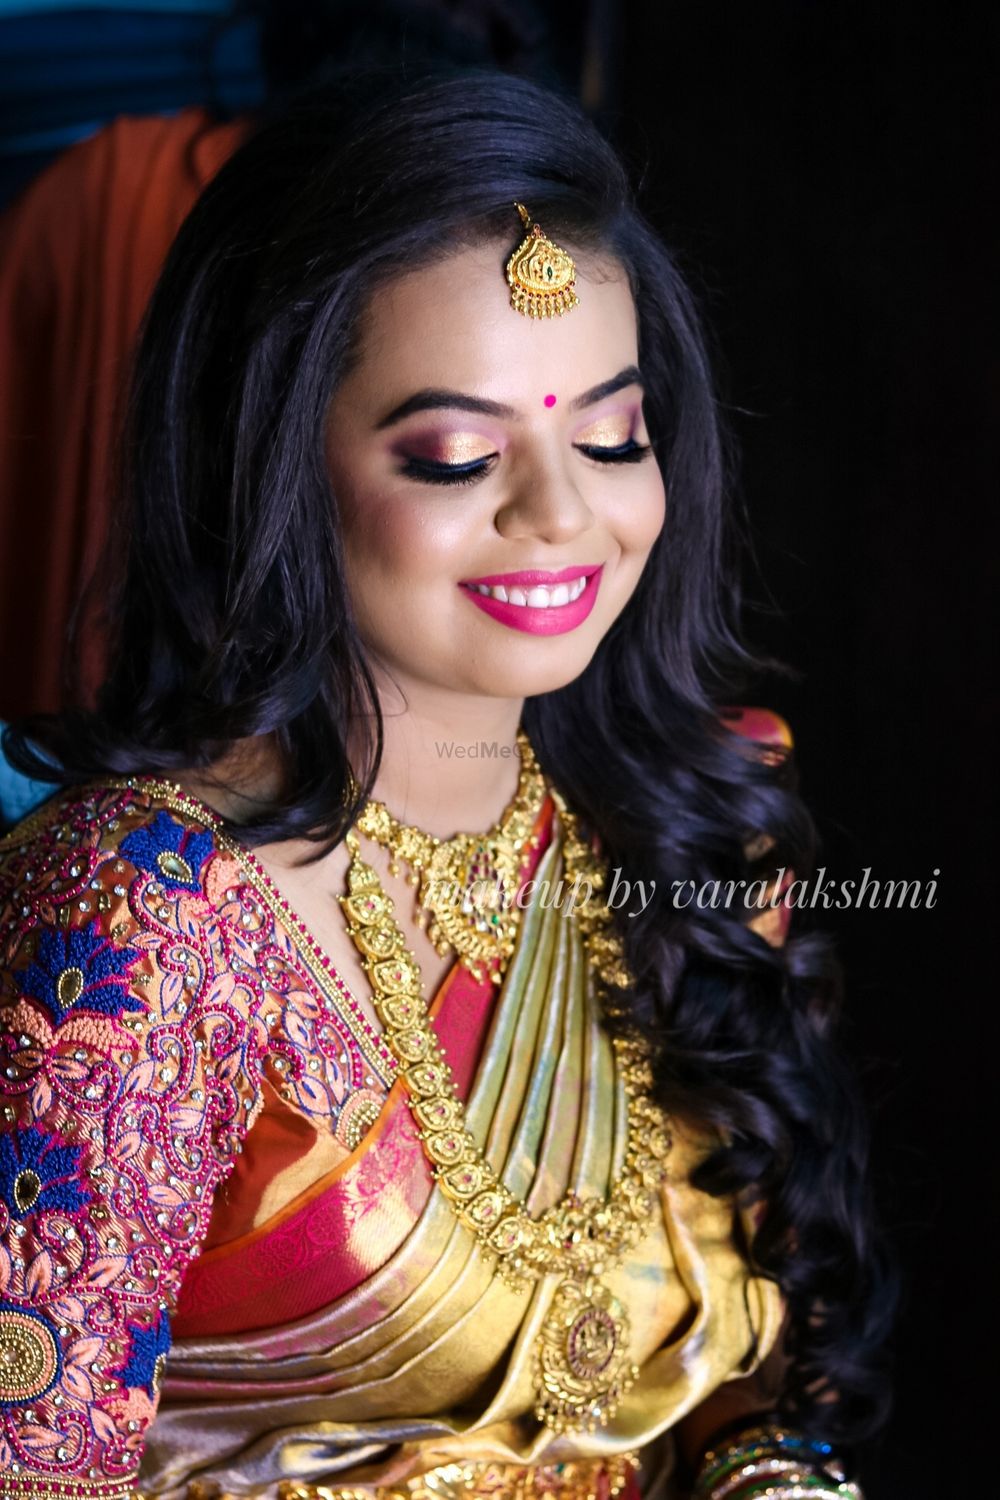 Photo From Prathiba's weddjng - By Makeup By Varalakshmi